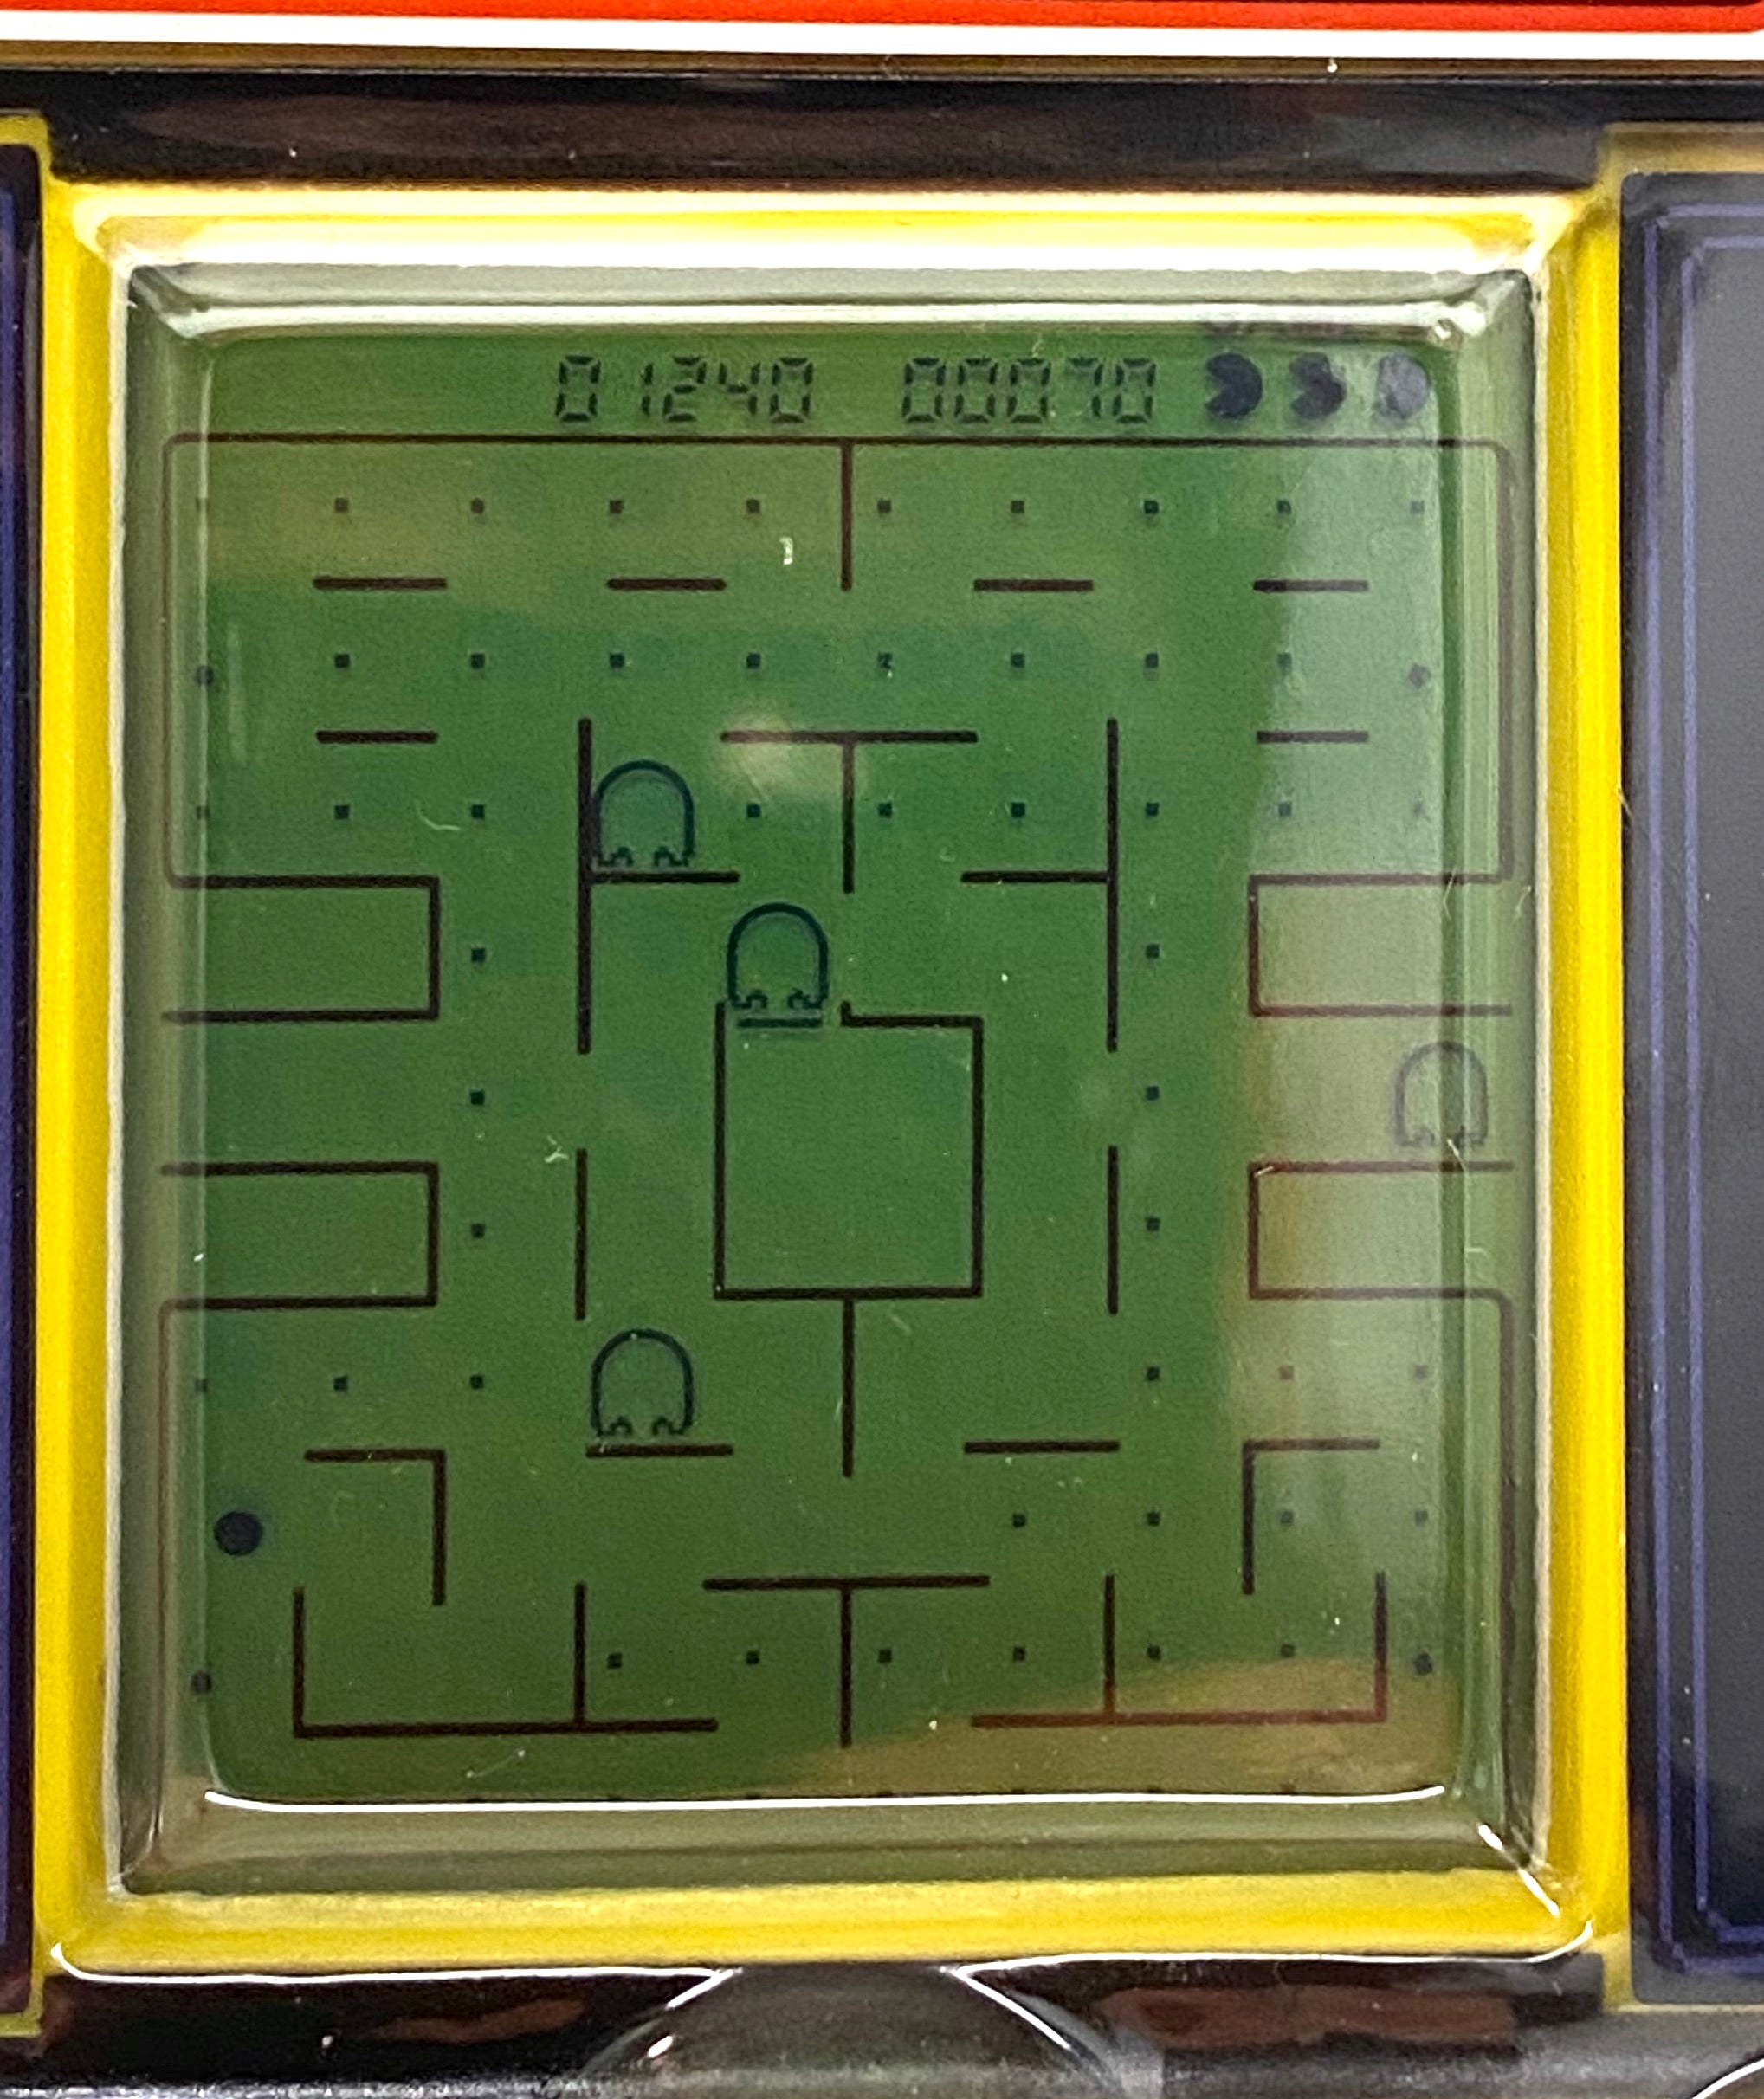 Classic Arcade Game - Pac-Man    